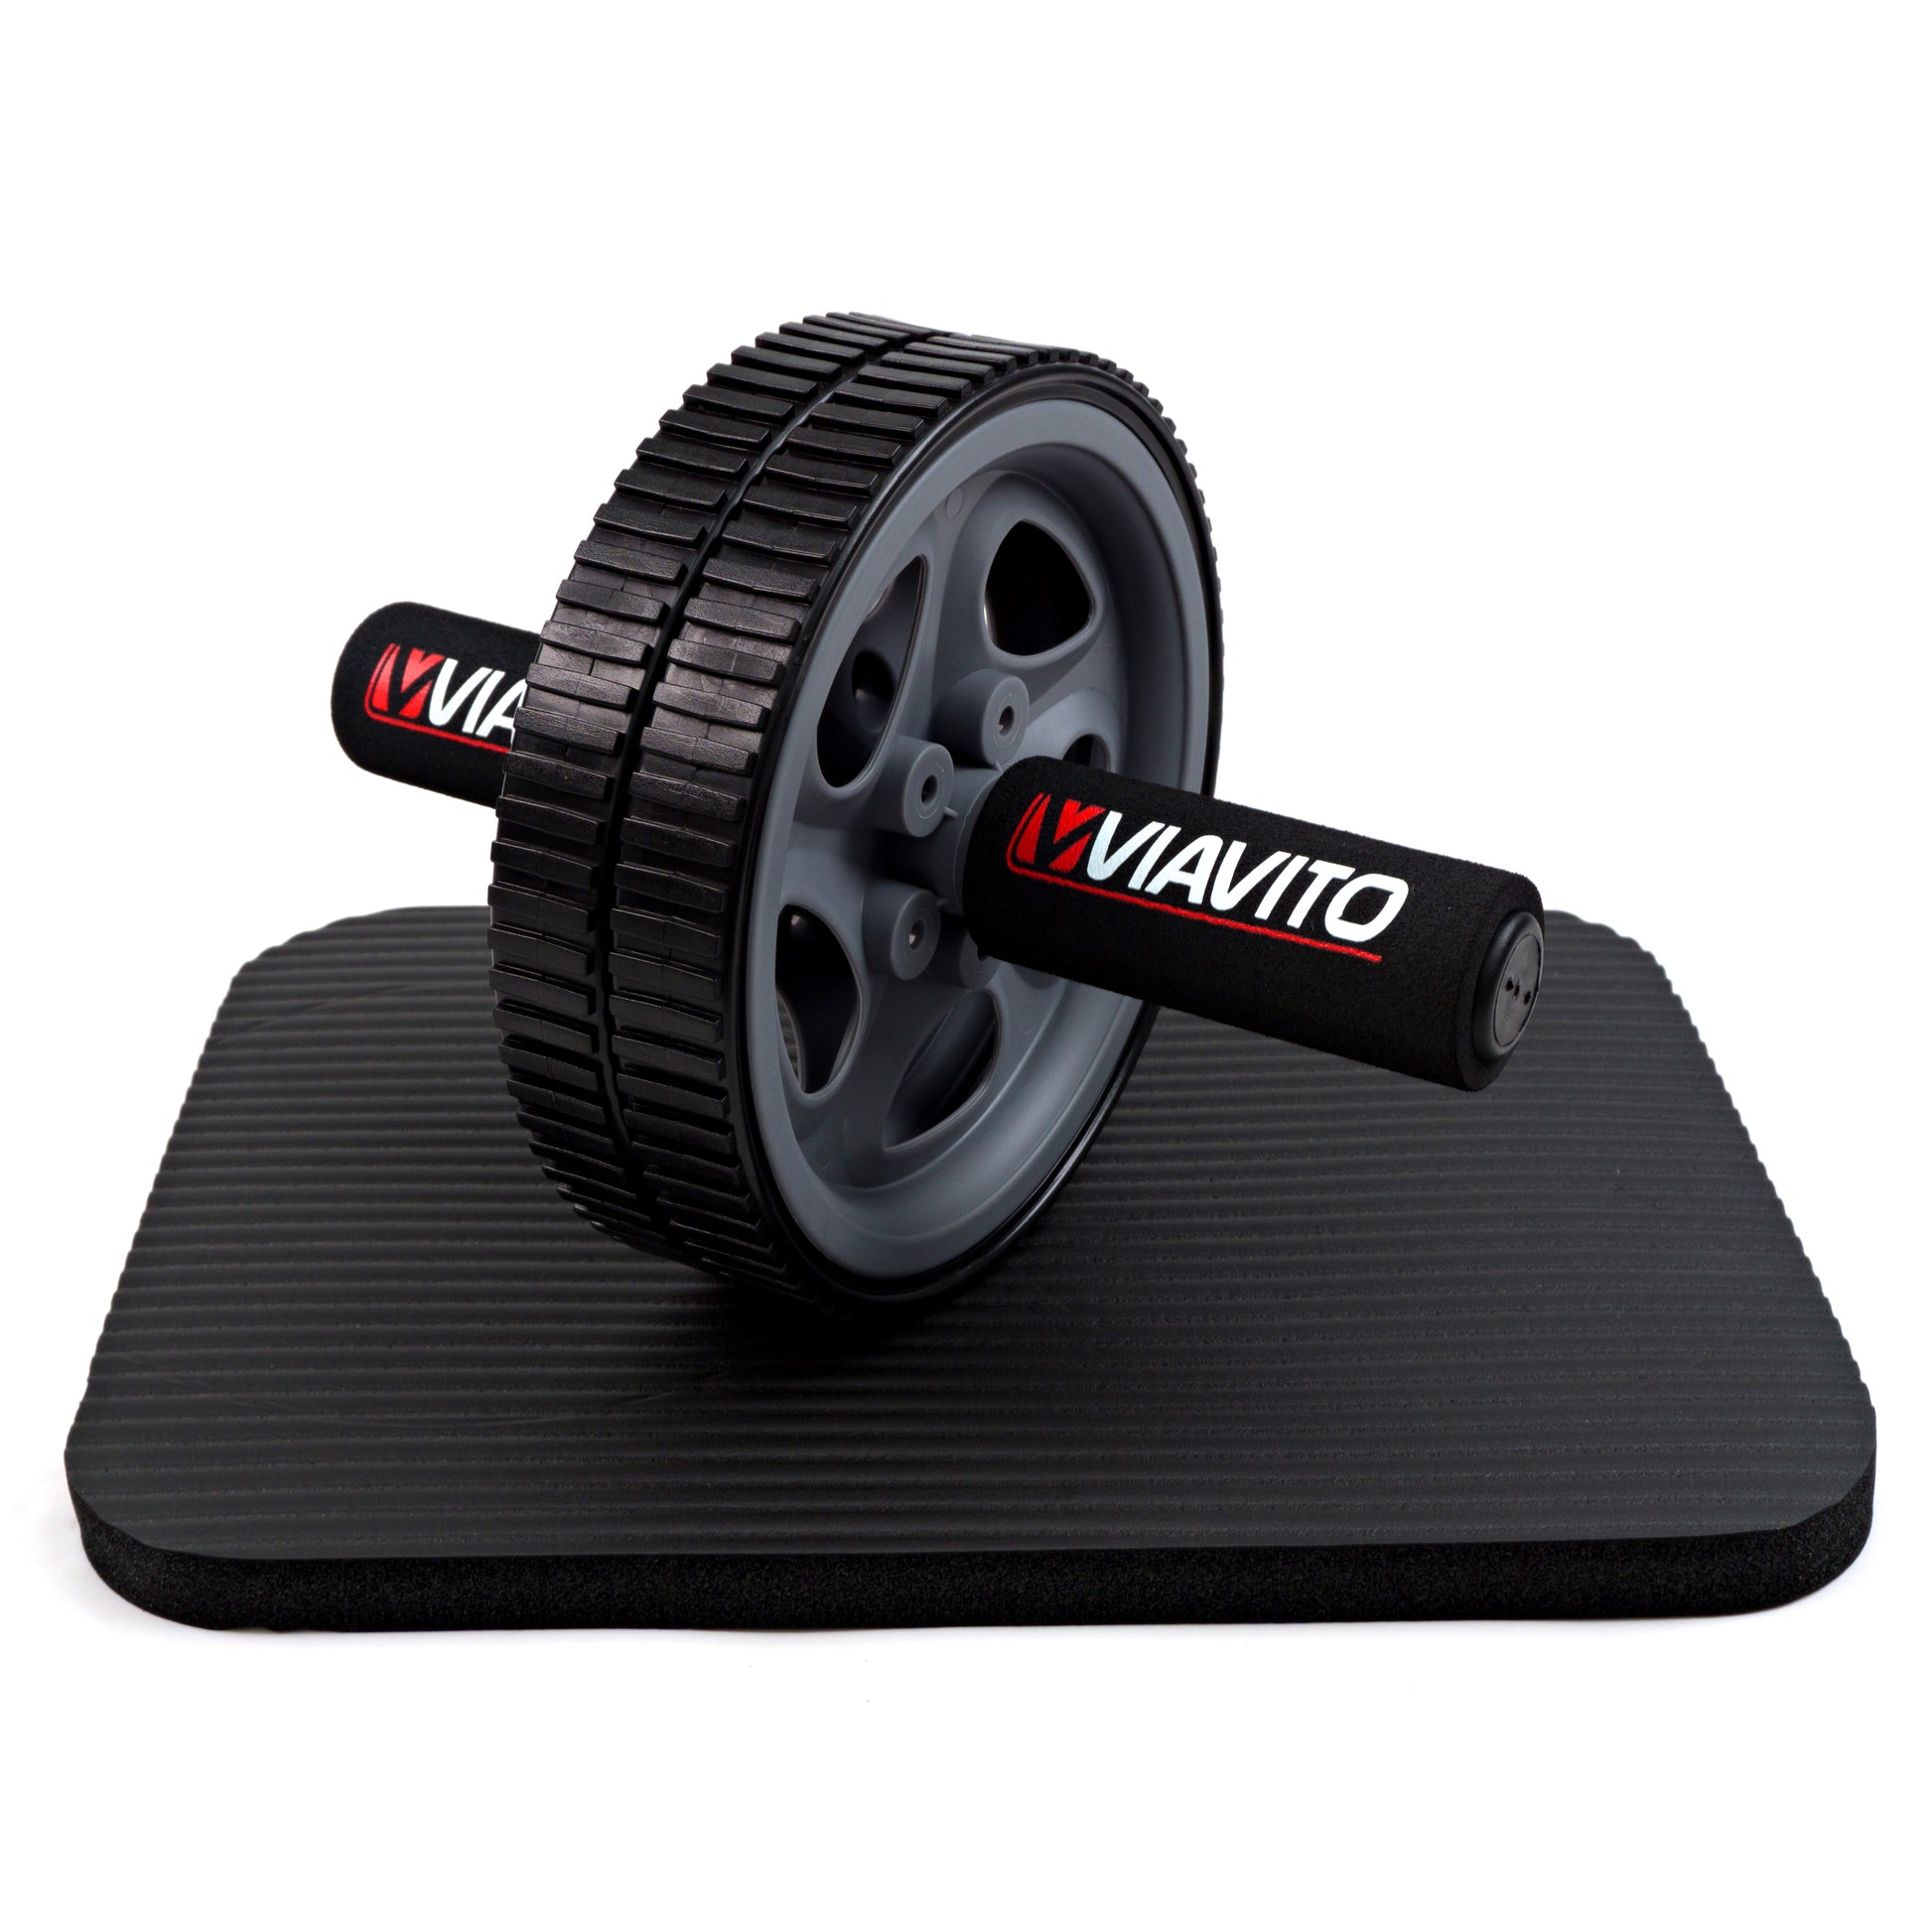 |Viavito Ab Exercise Wheel - Parts - On the Matt|